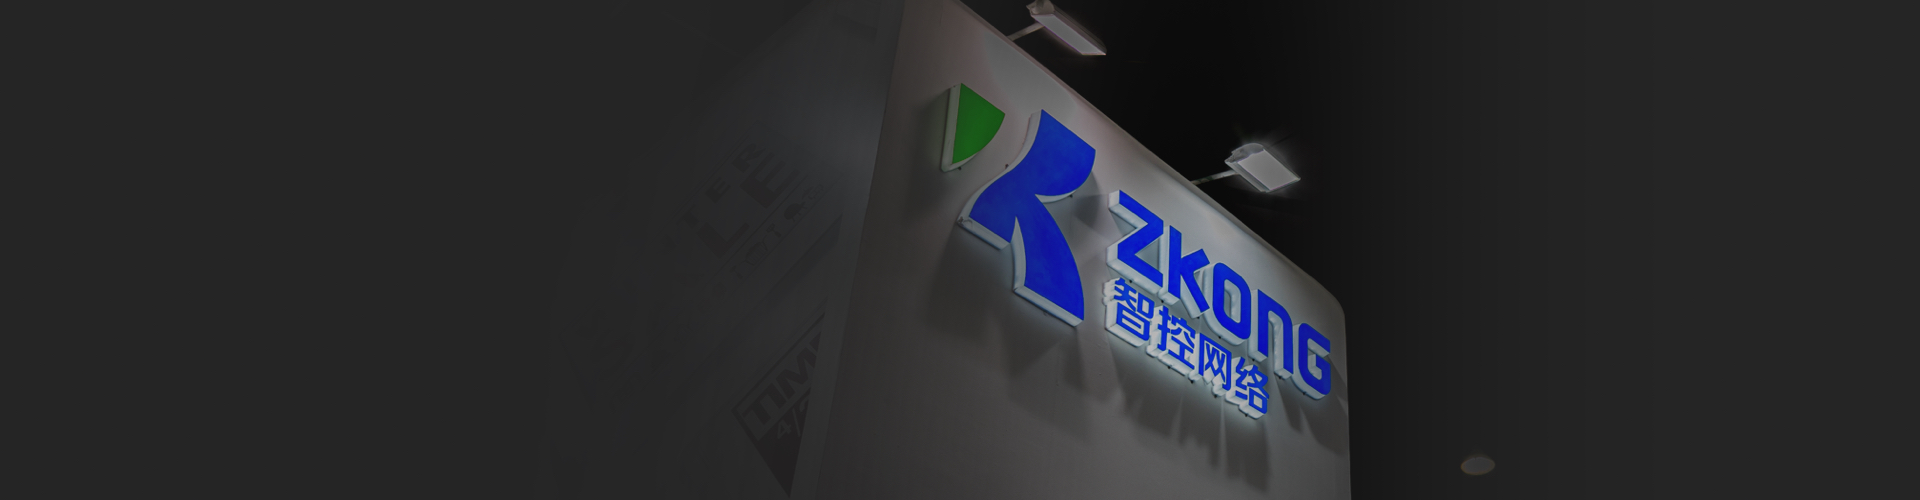 Zkong's New Digital Signage Application at China Light Manufacturing CIO Forumvv